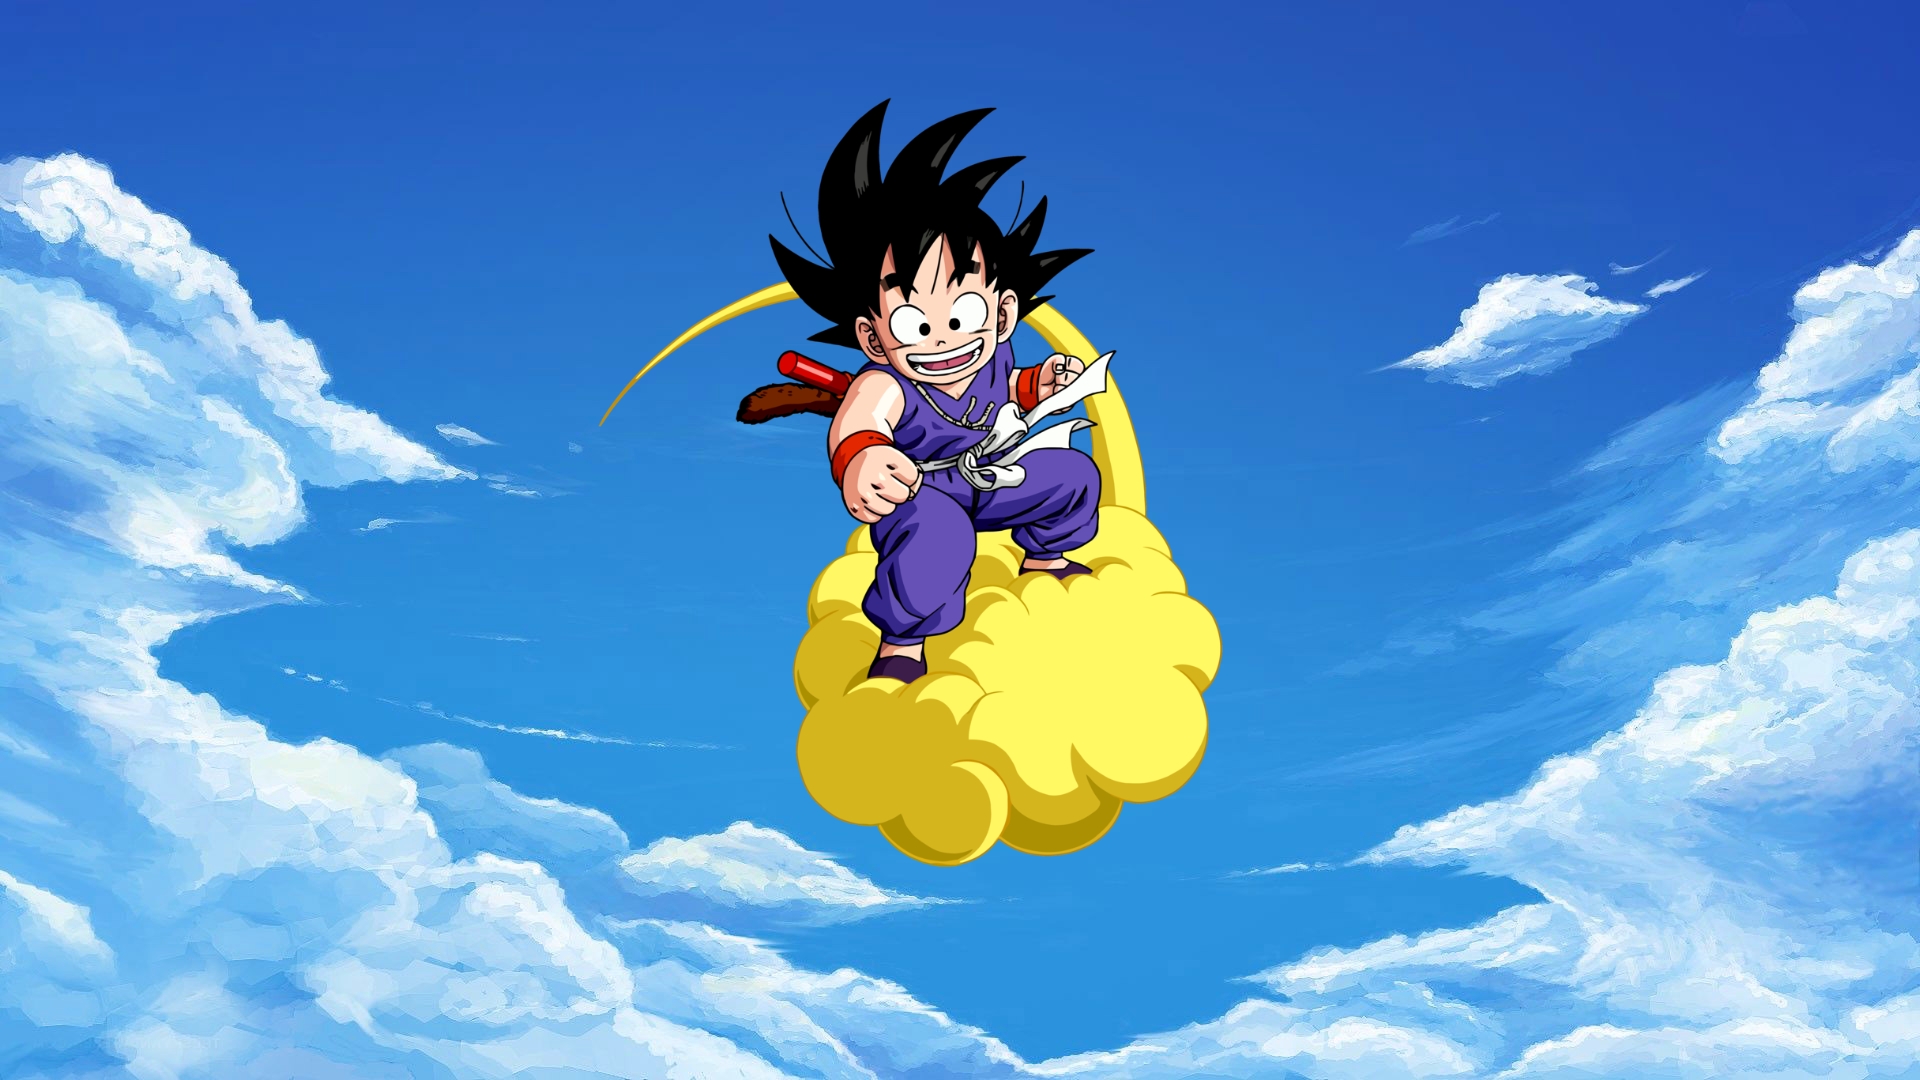 Kid Goku Sky by SuperAgua on DeviantArt